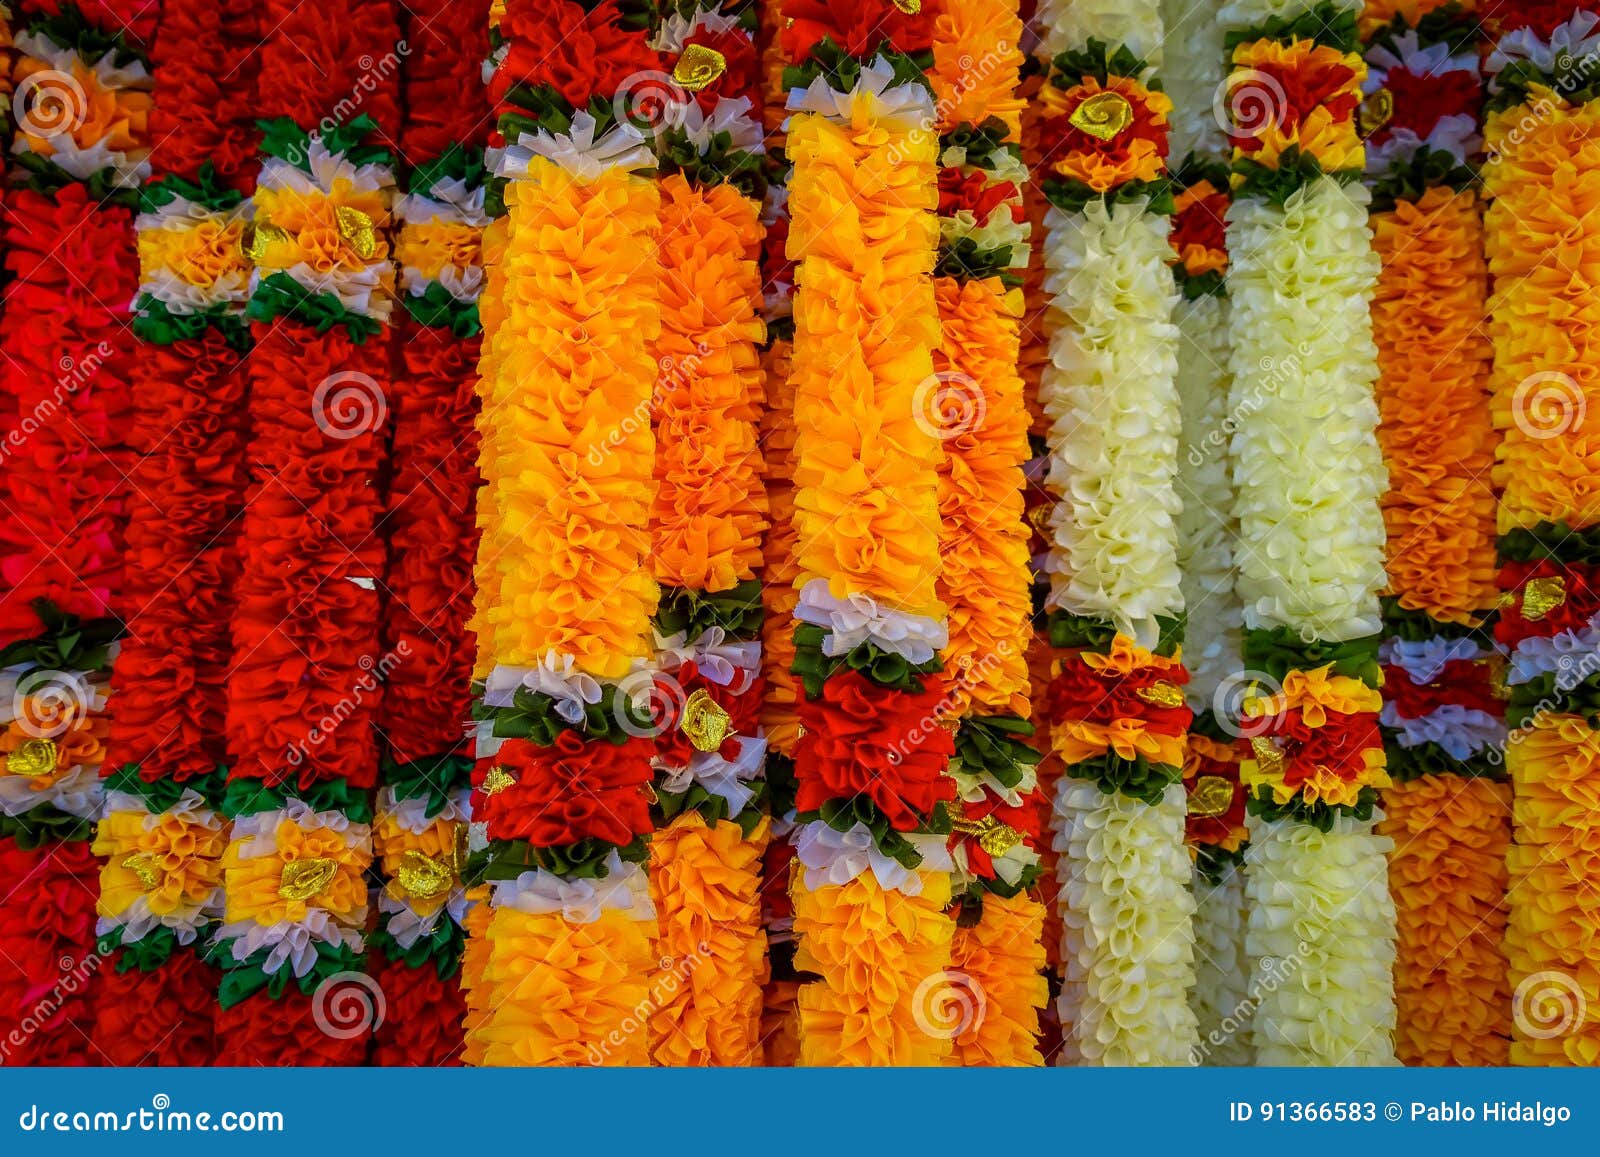 Close Up Shot of Beautiful Flower Garland in Malaysia Stock Image ...